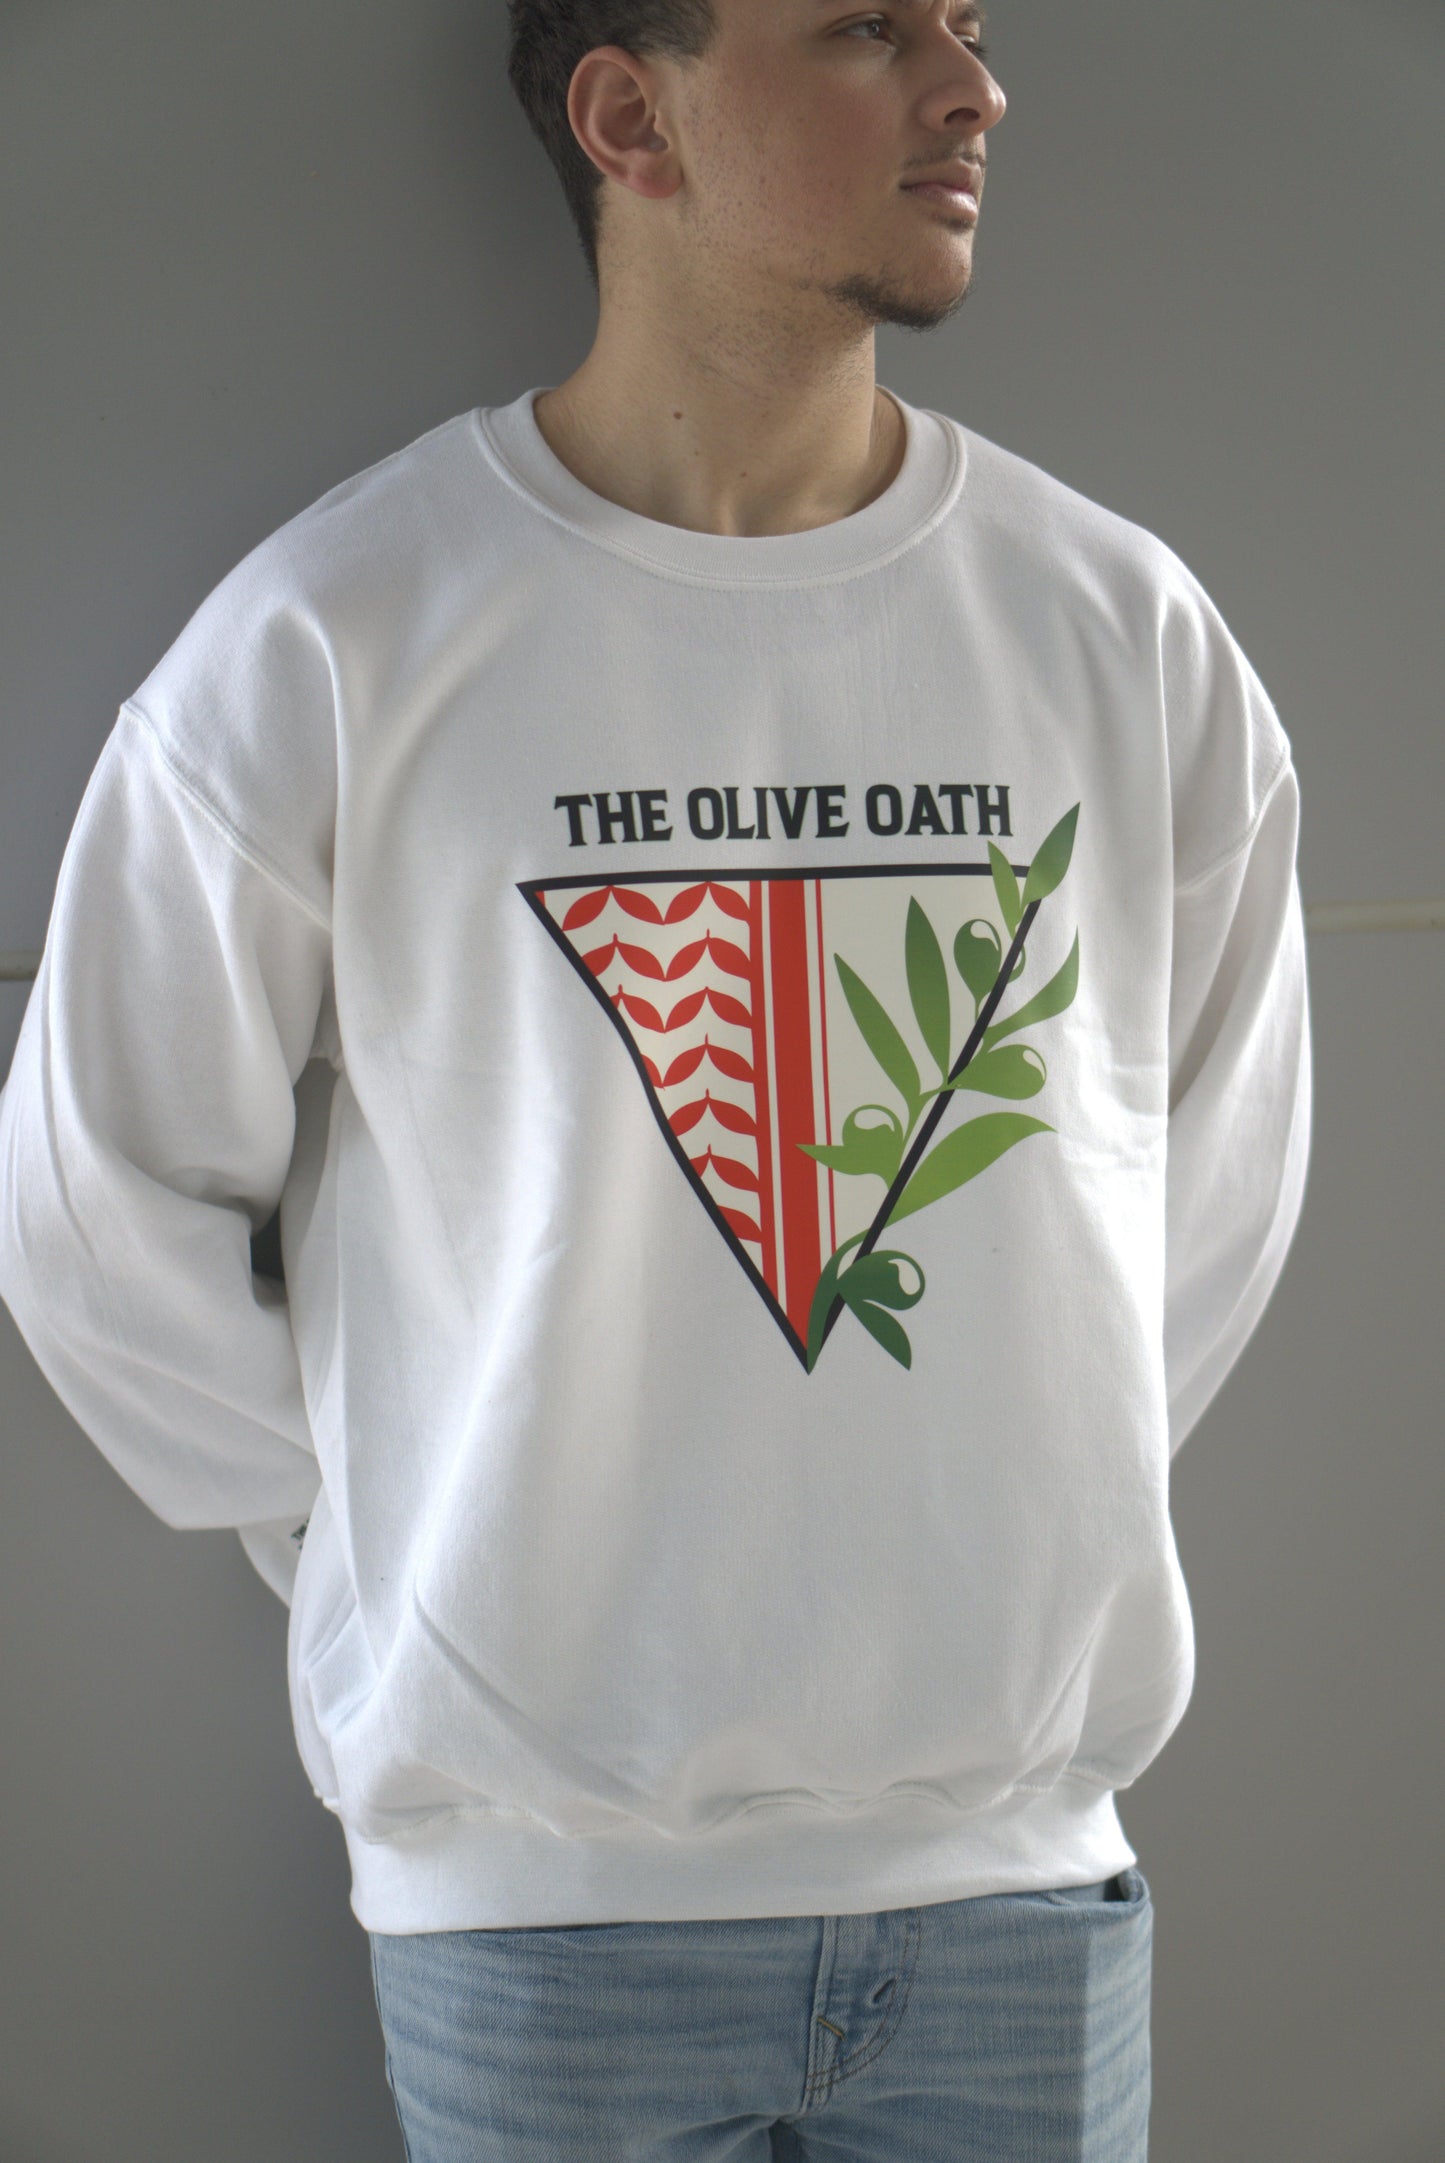 The Olive Oath - Triangle Design Sweatshirt - The Olive Oath